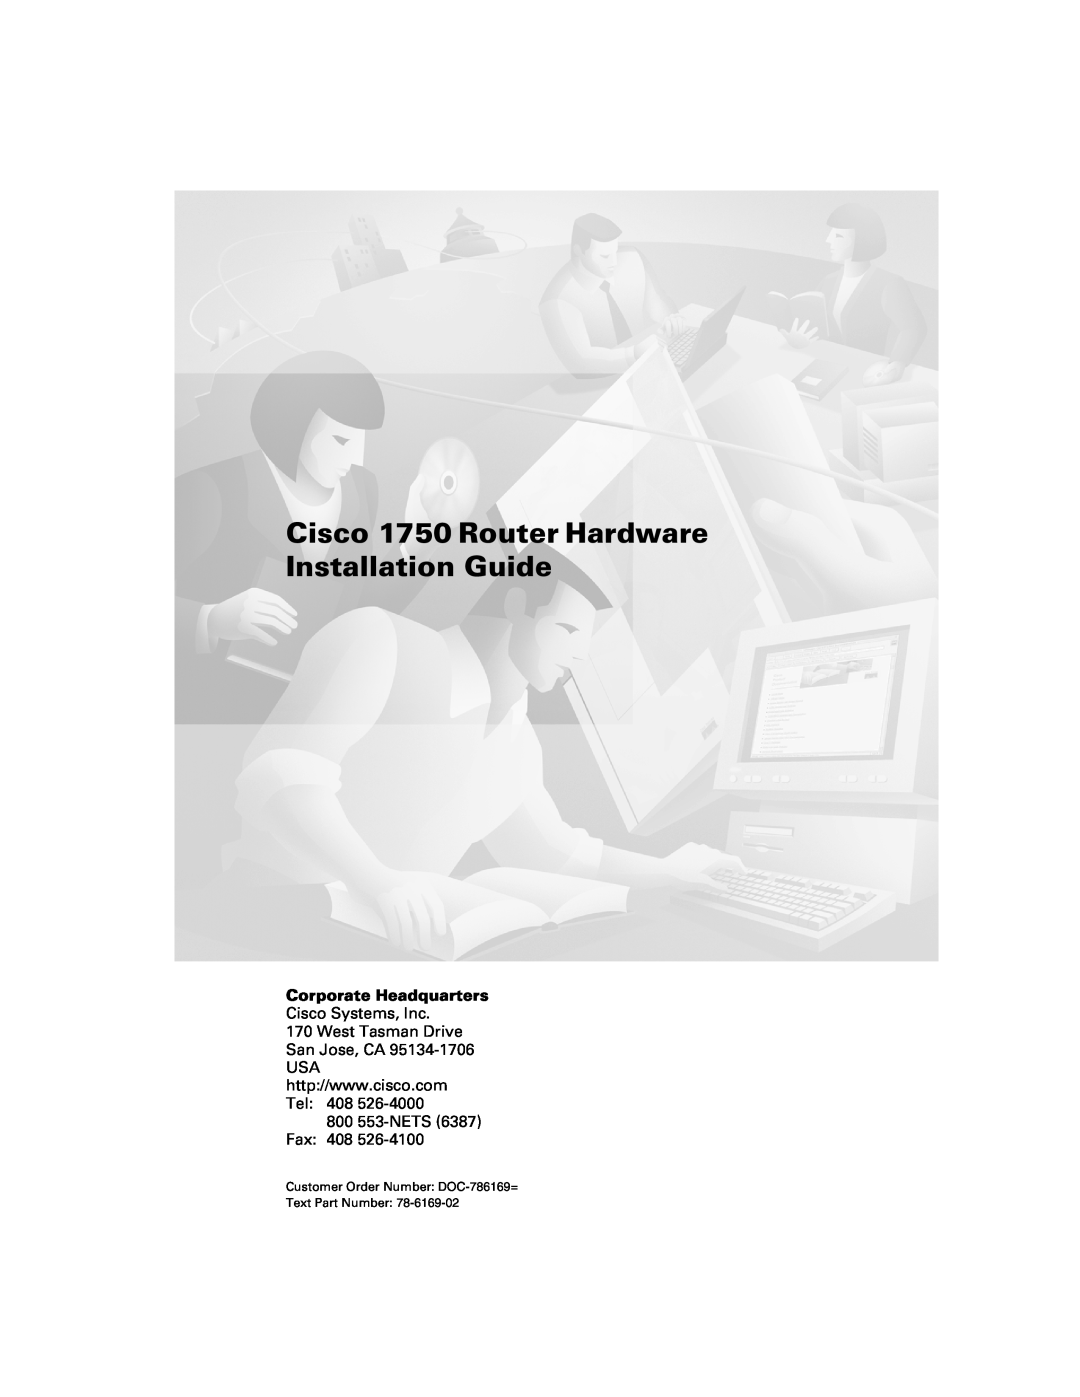 Cisco Systems CISCO1750 manual Cisco 1750 Router Hardware Installation Guide, Corporate Headquarters 